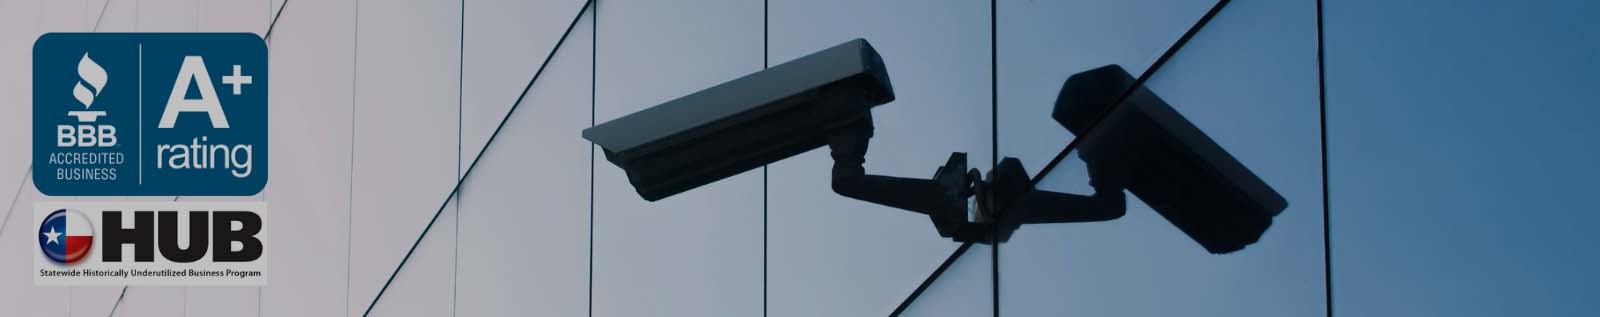 houston-surveillance-cameras-security-systems Houston Surveillance Cameras